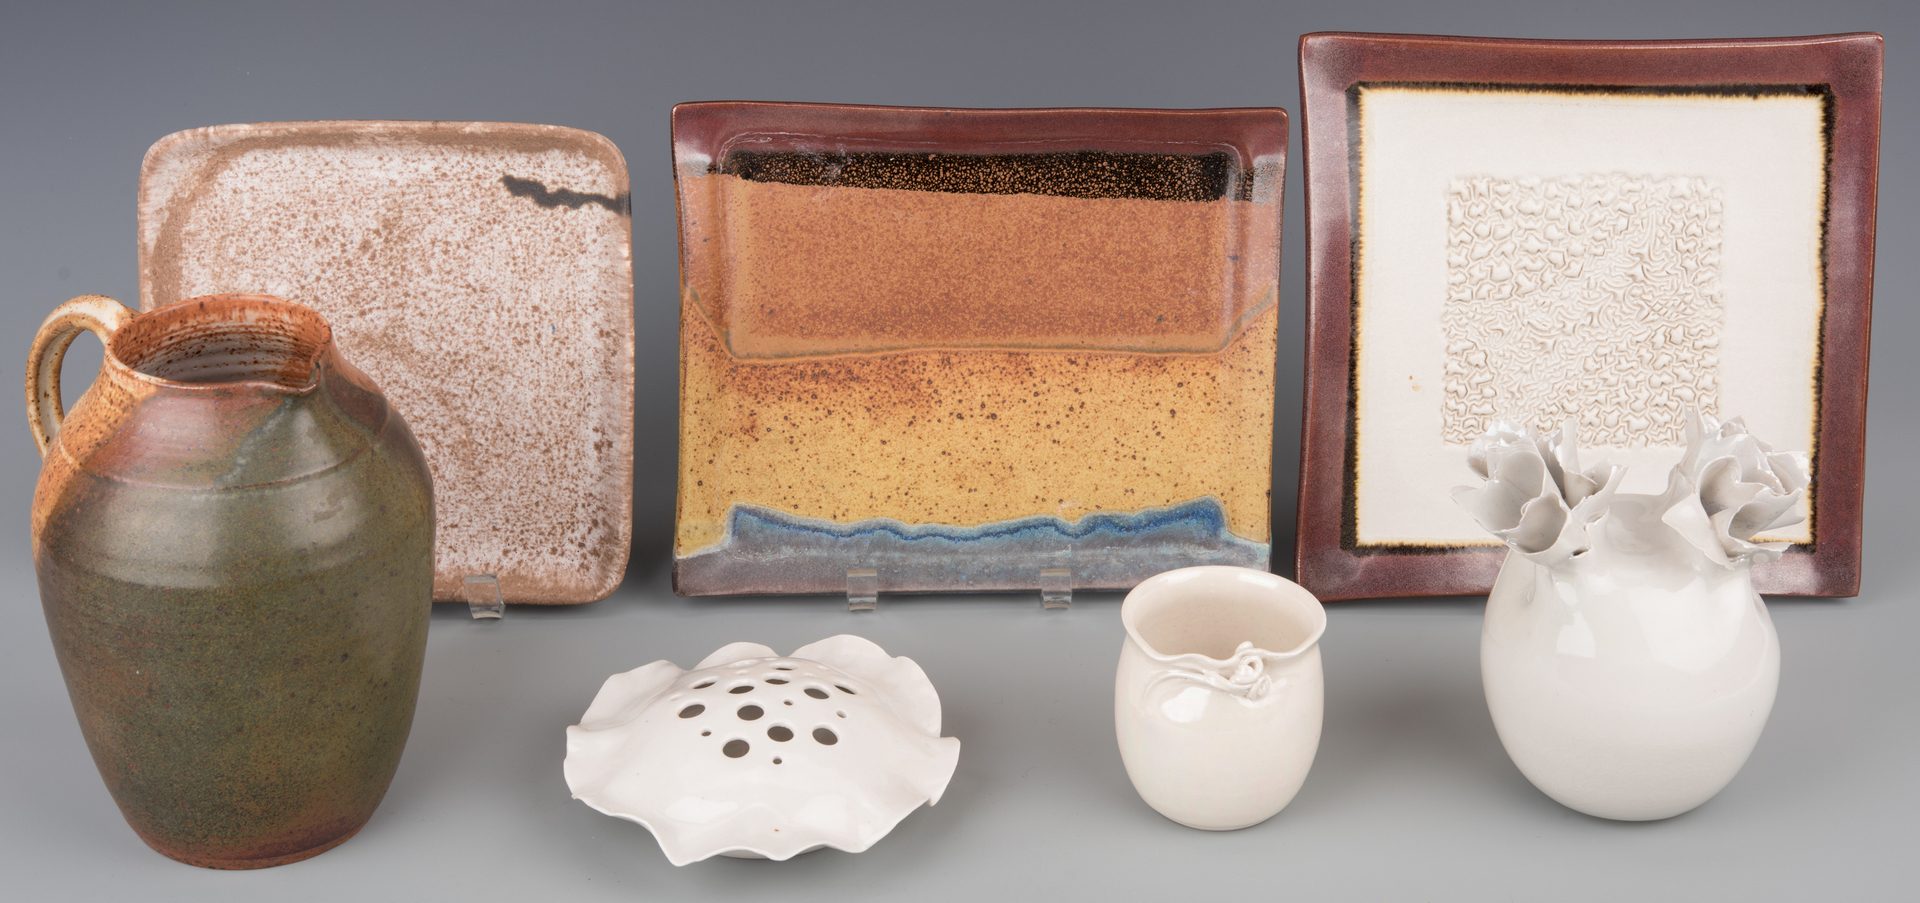 Lot 408: 7 Sylvia Hyman Ceramic Items & Book